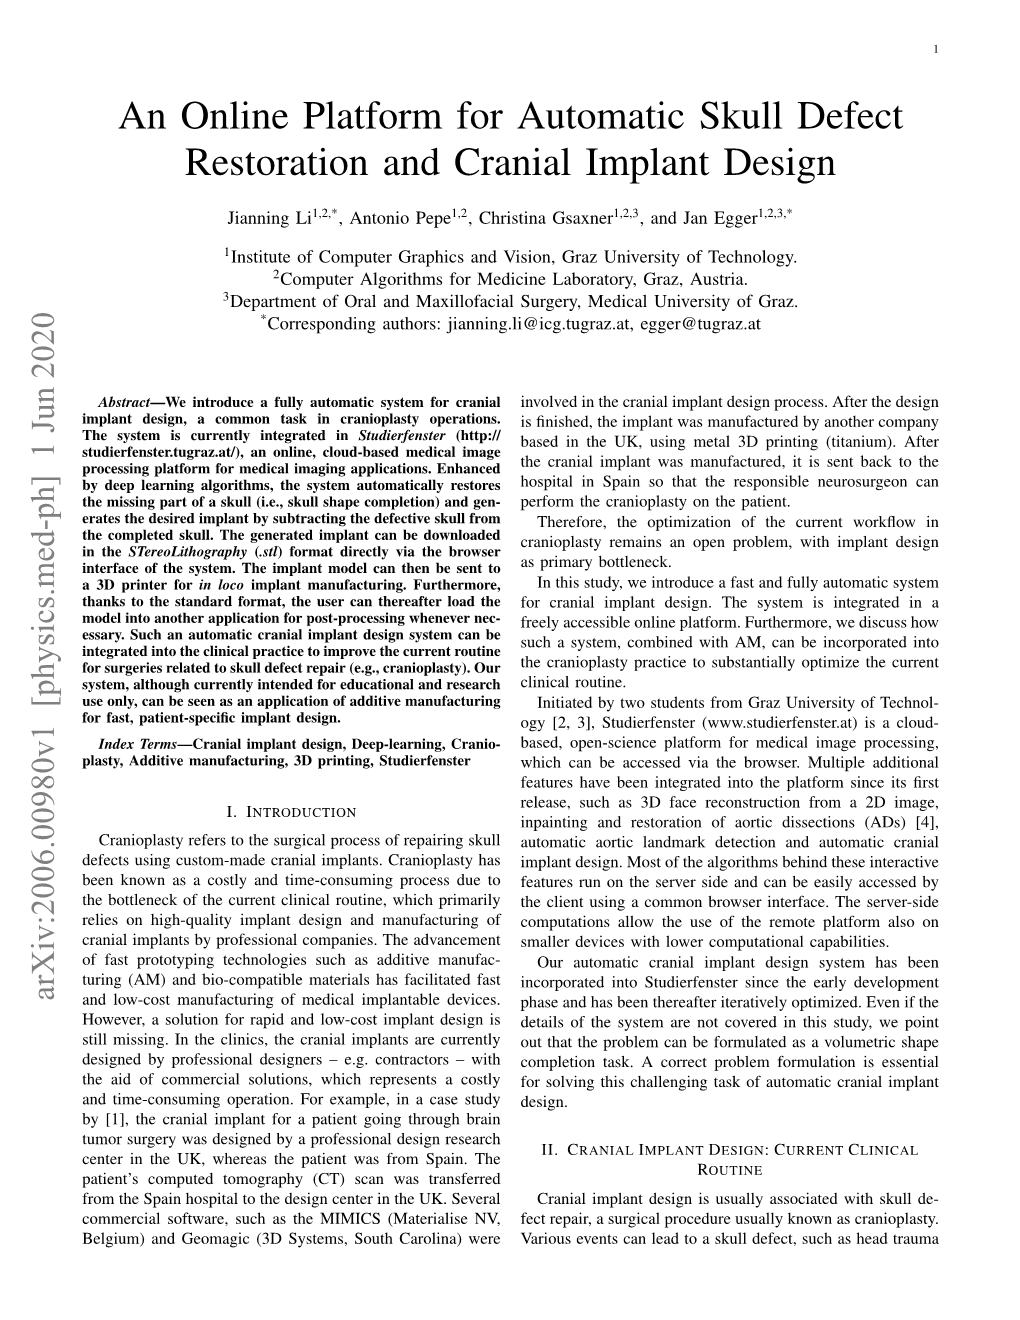 An Online Platform for Automatic Skull Defect Restoration and Cranial Implant Design